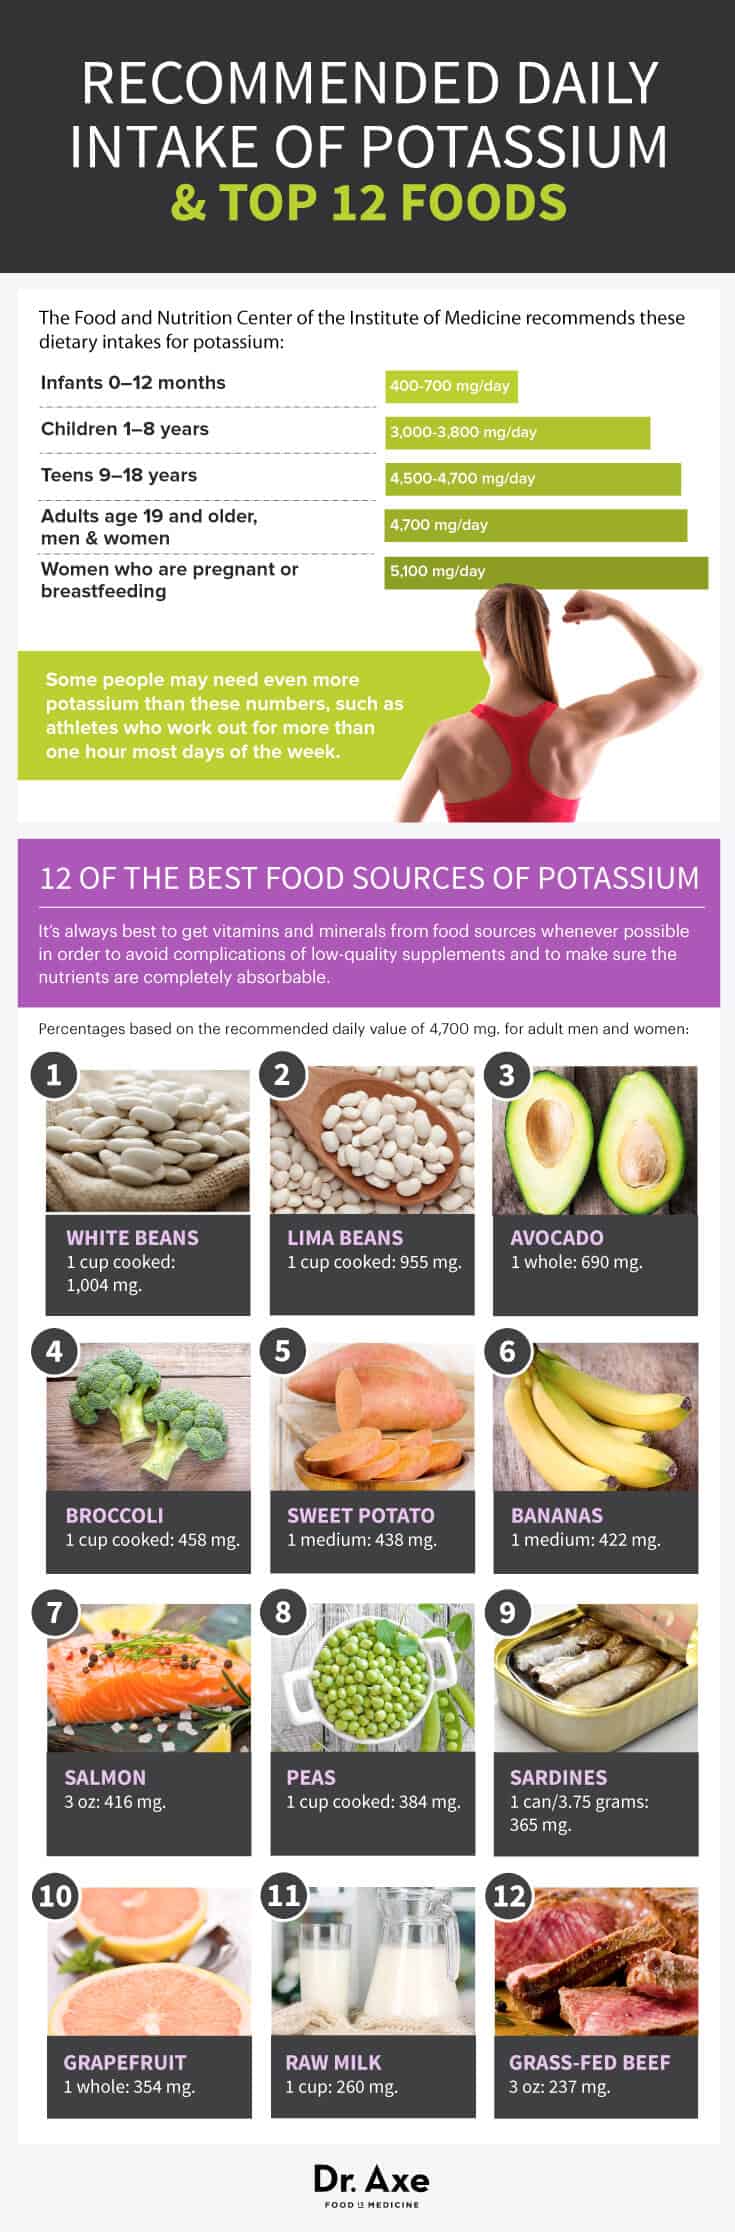 what does a low potassium diet consist of